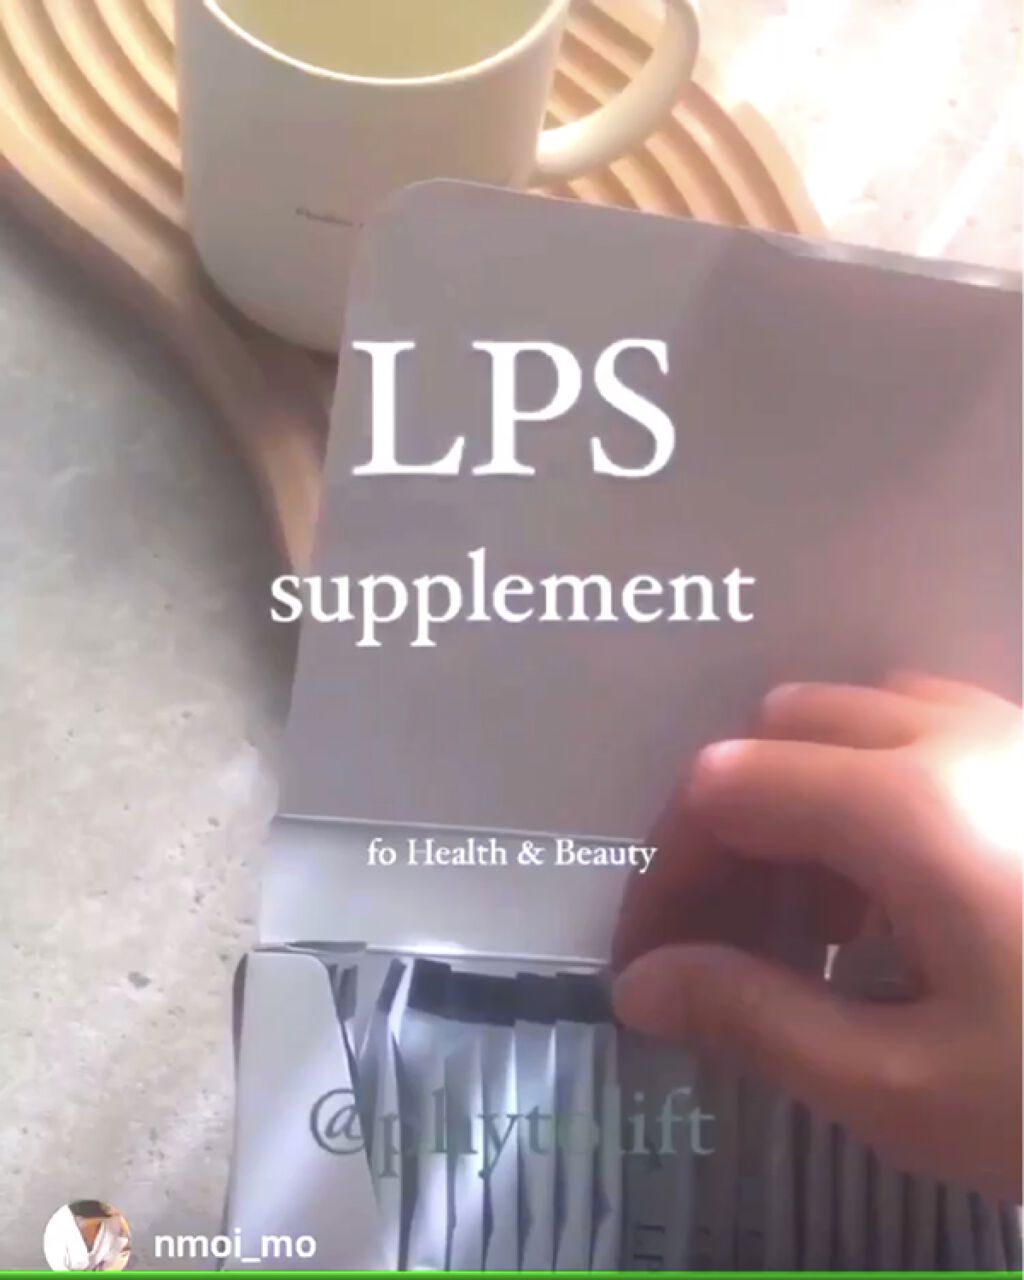 LPS supplement/PHYTOLIFT(フィトリフト)/美容サプリメントの動画クチコミ1つ目